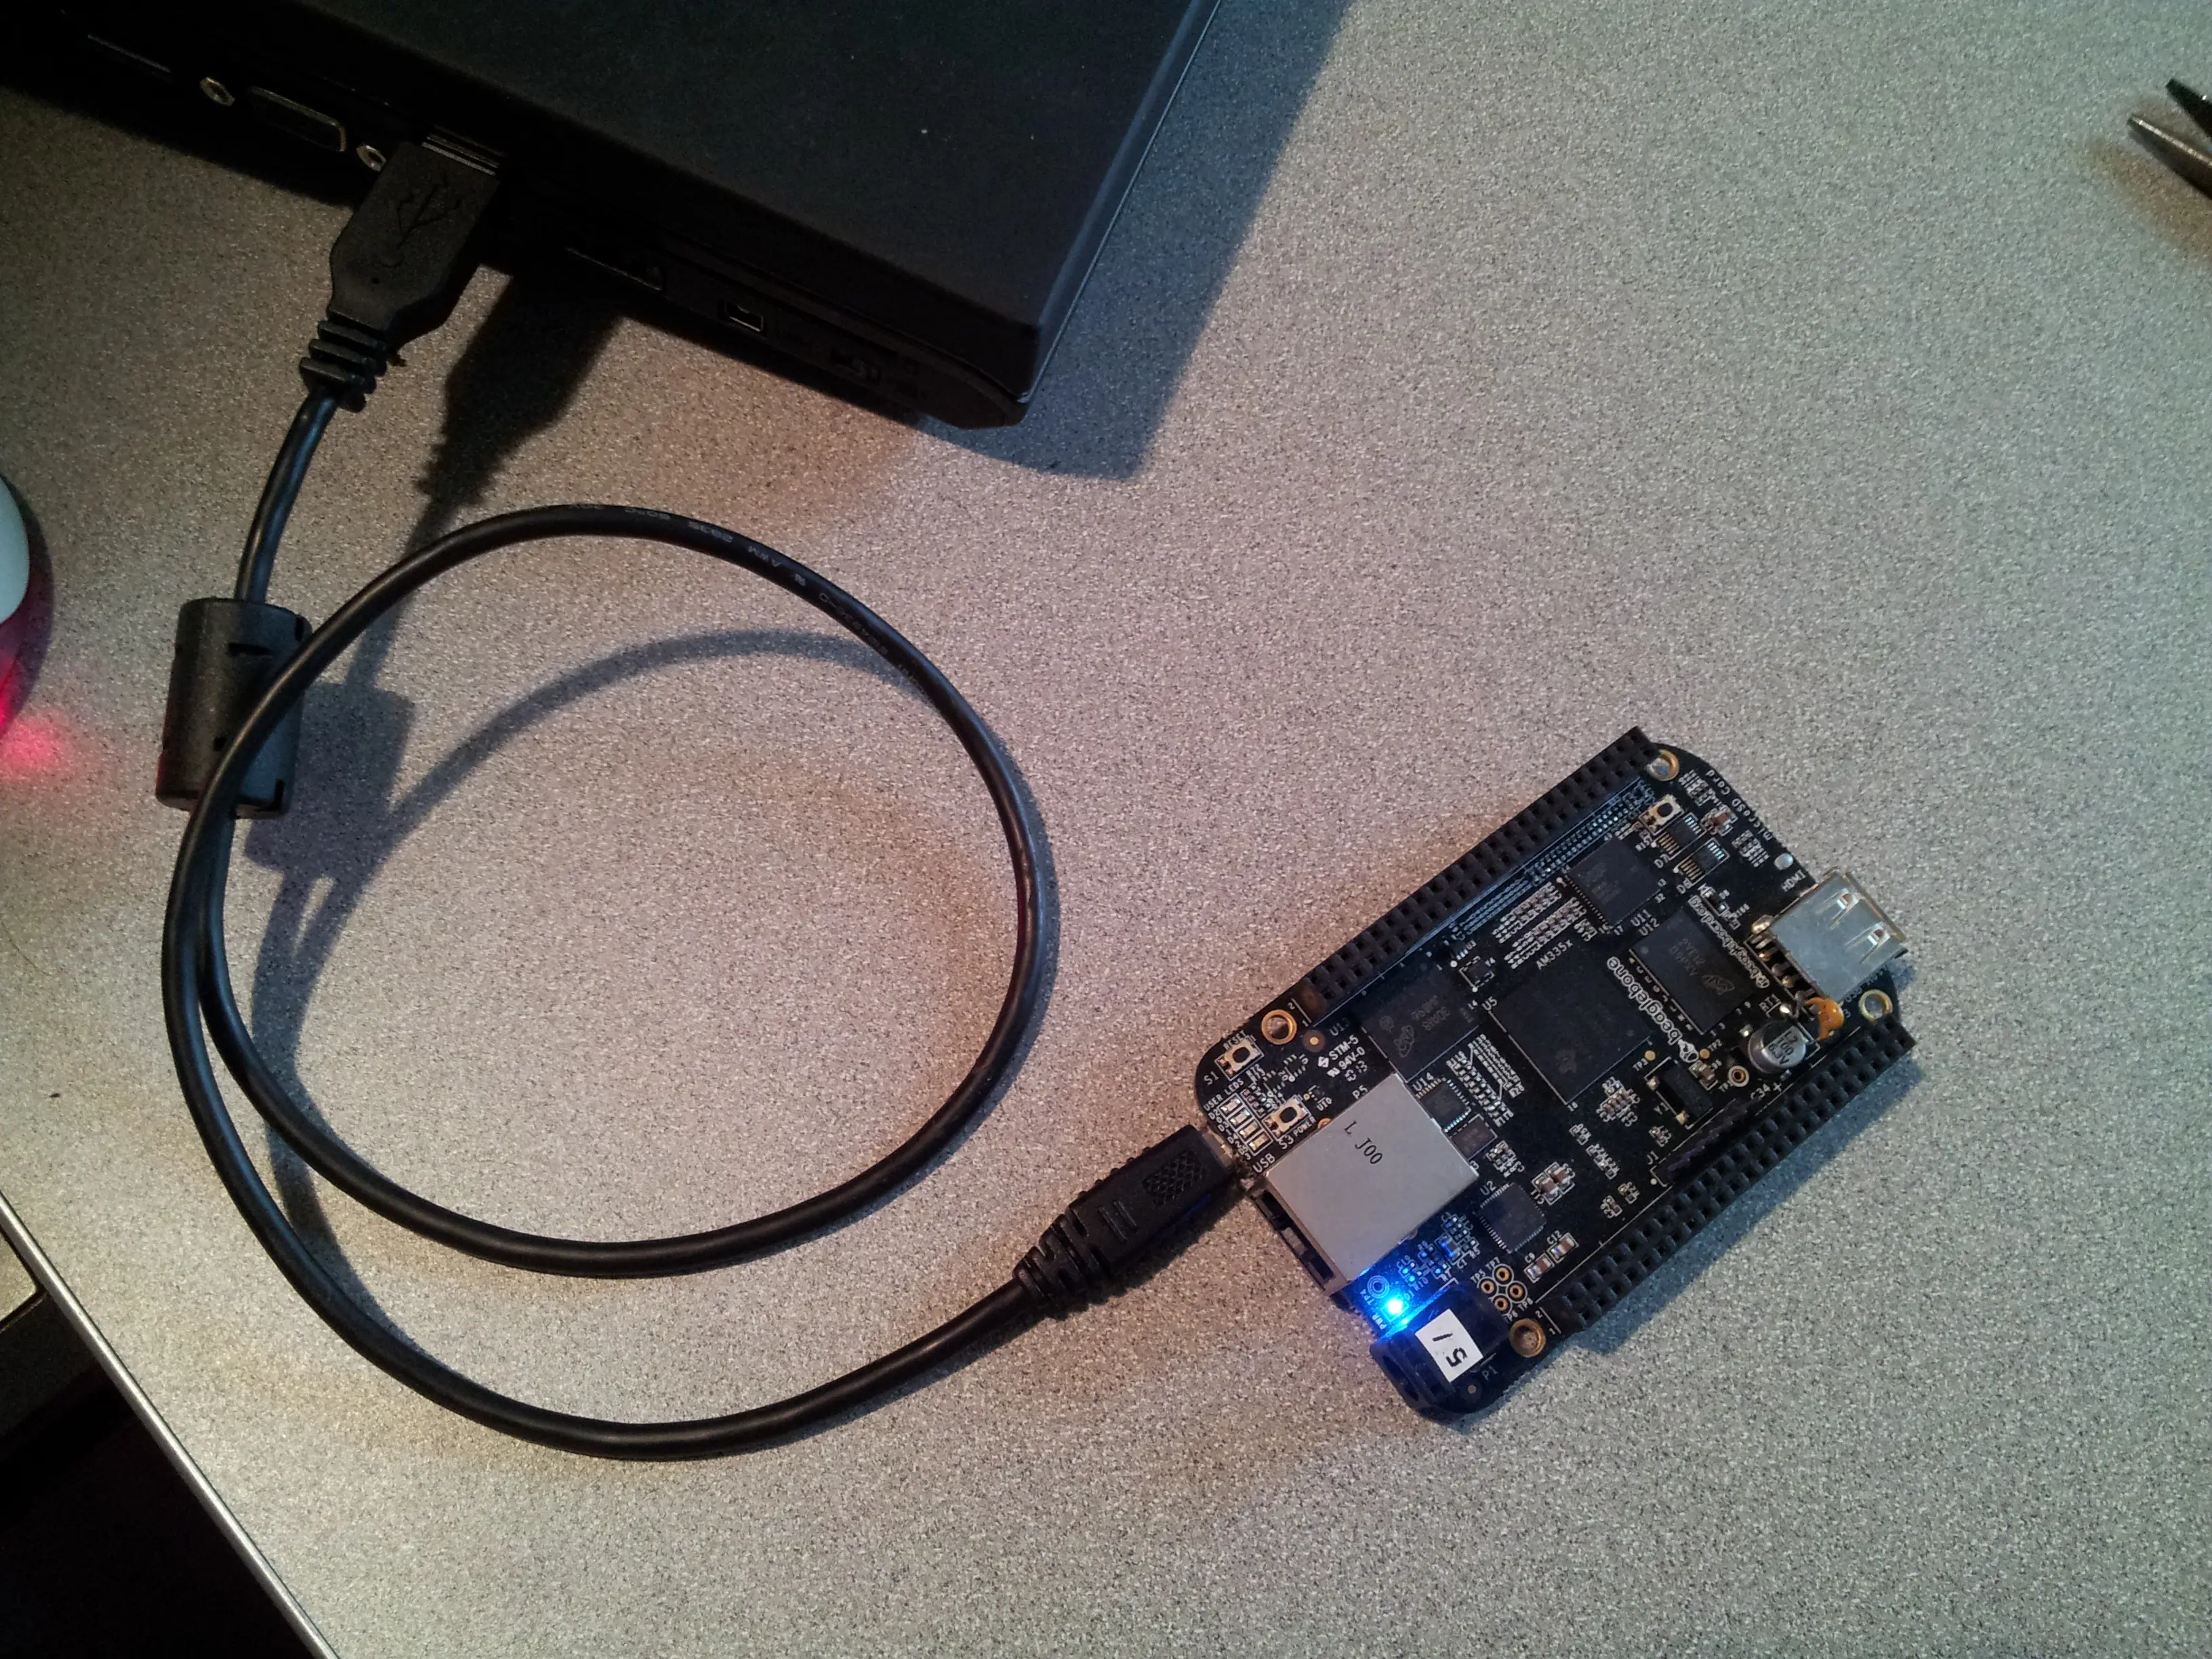 Plugging BeagleBone Black into a USB port